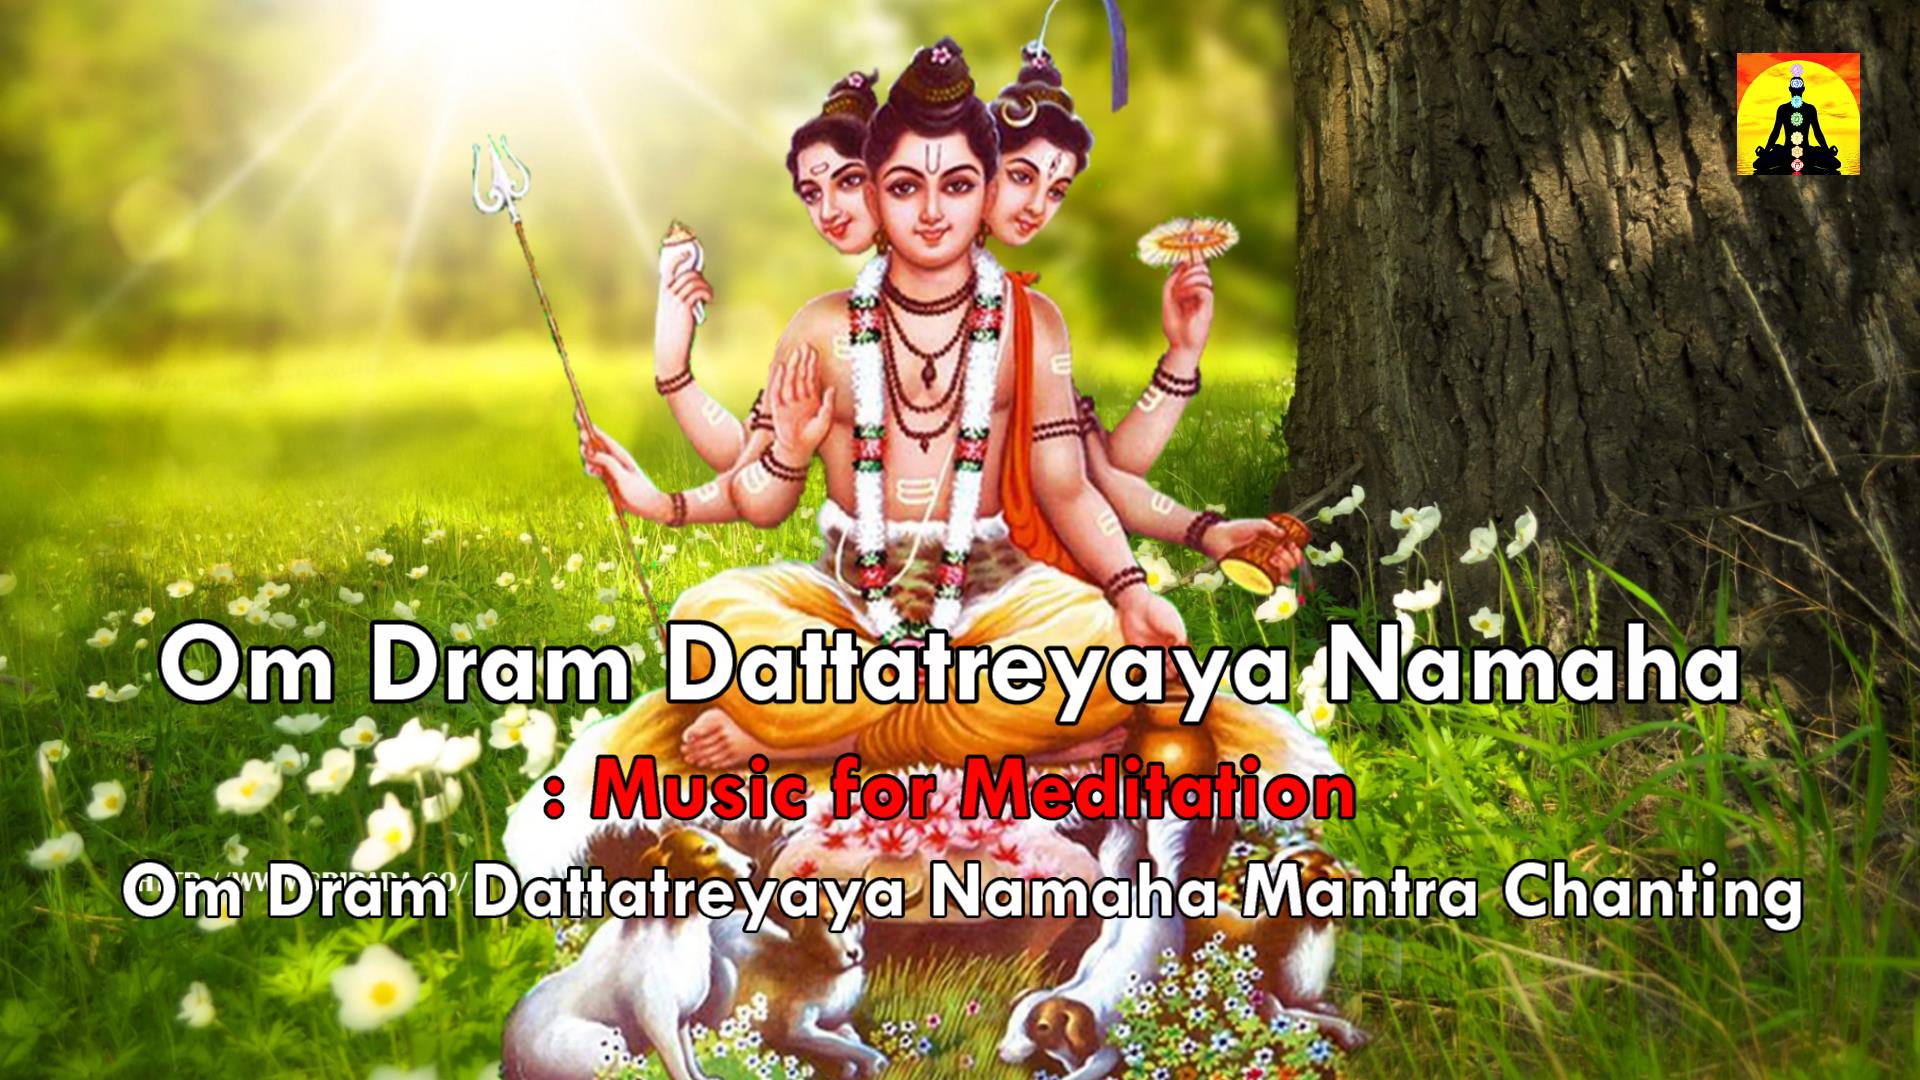 Om Dram Dattatreyaya Namaha